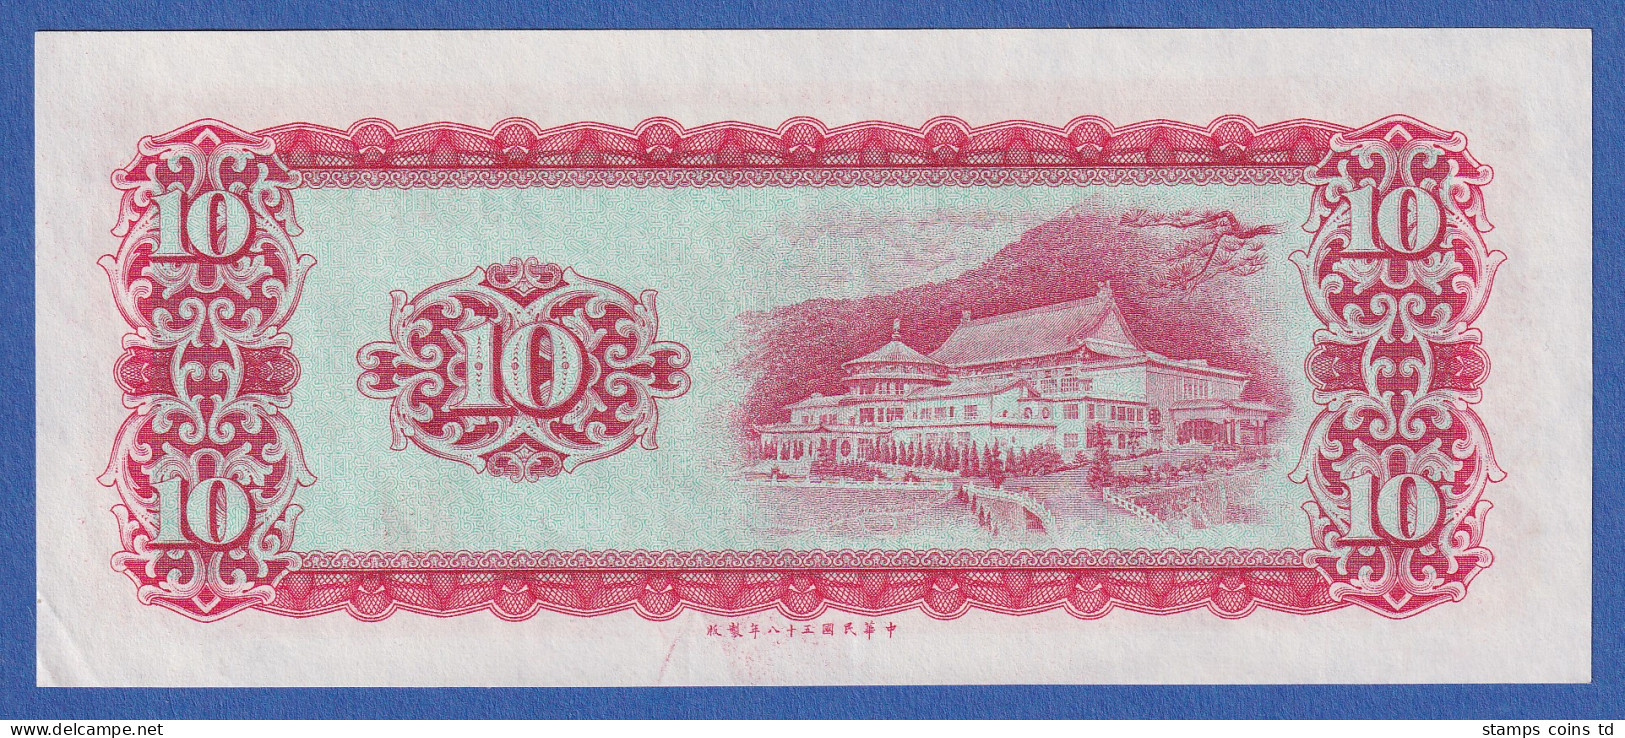 China Taiwan 1969 Banknote 10 Yuan Bankfrisch, Unzirkuliert. - China